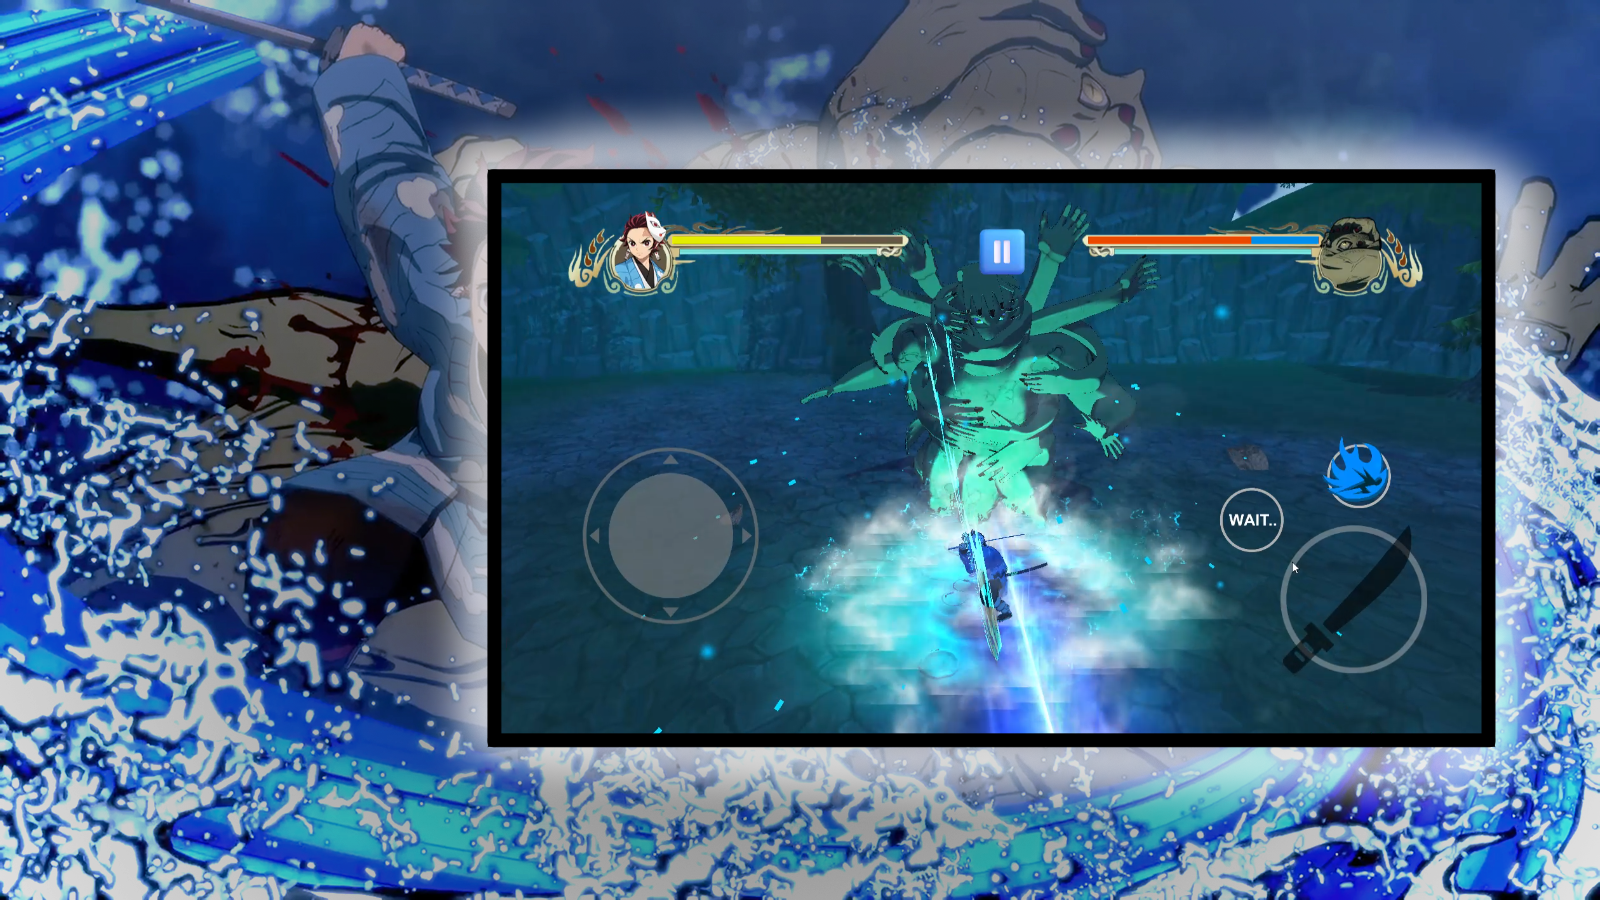 Kimetsu Battle Demon Fight android iOS apk download for free-TapTap